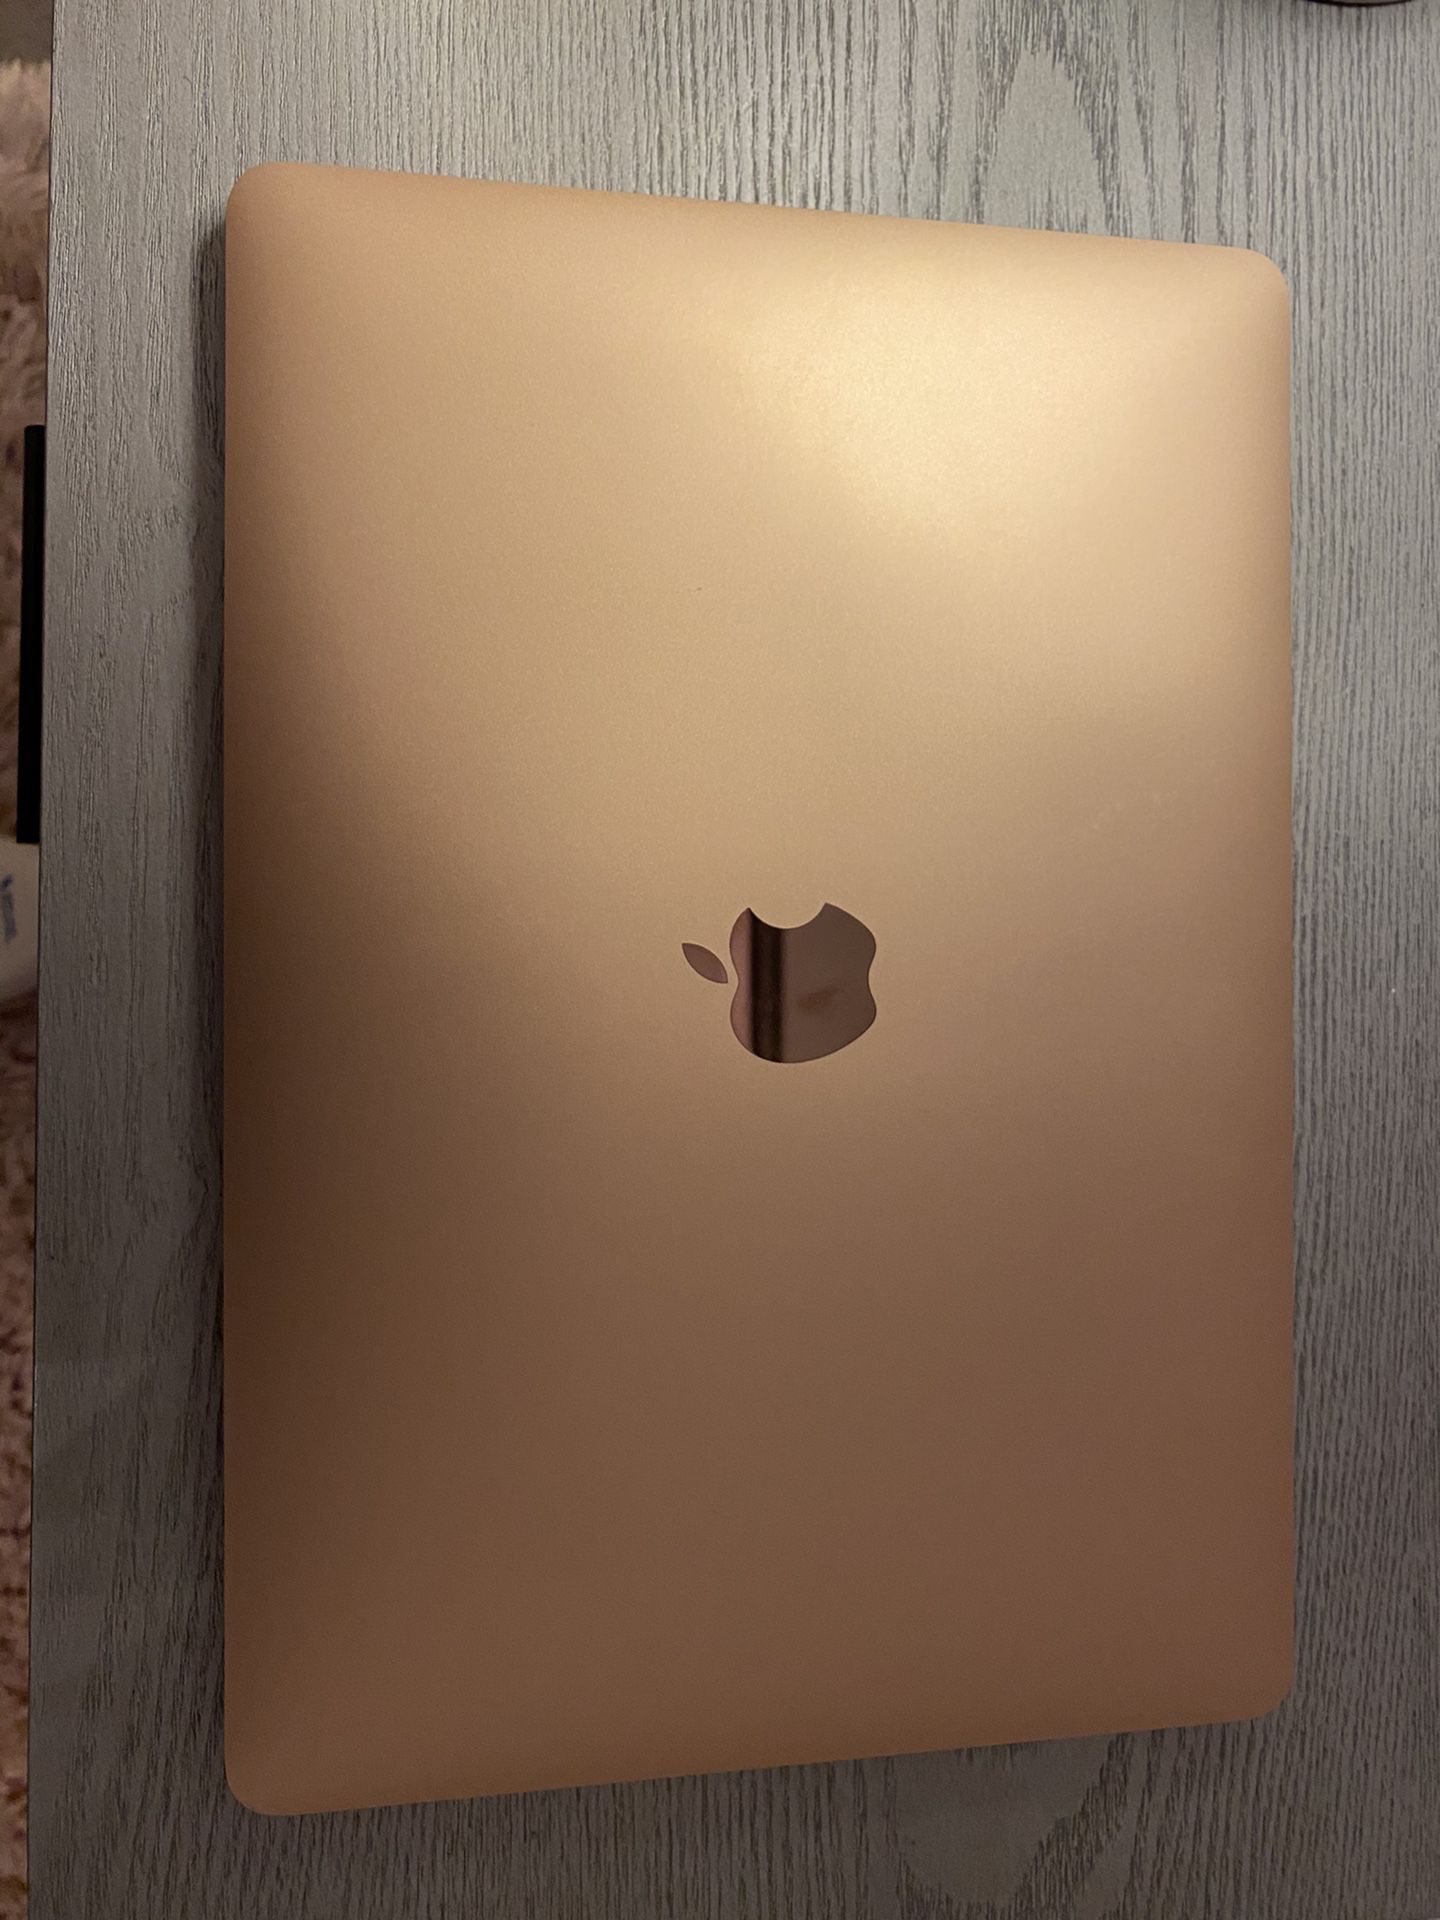 Macbook Air 2019 Gold